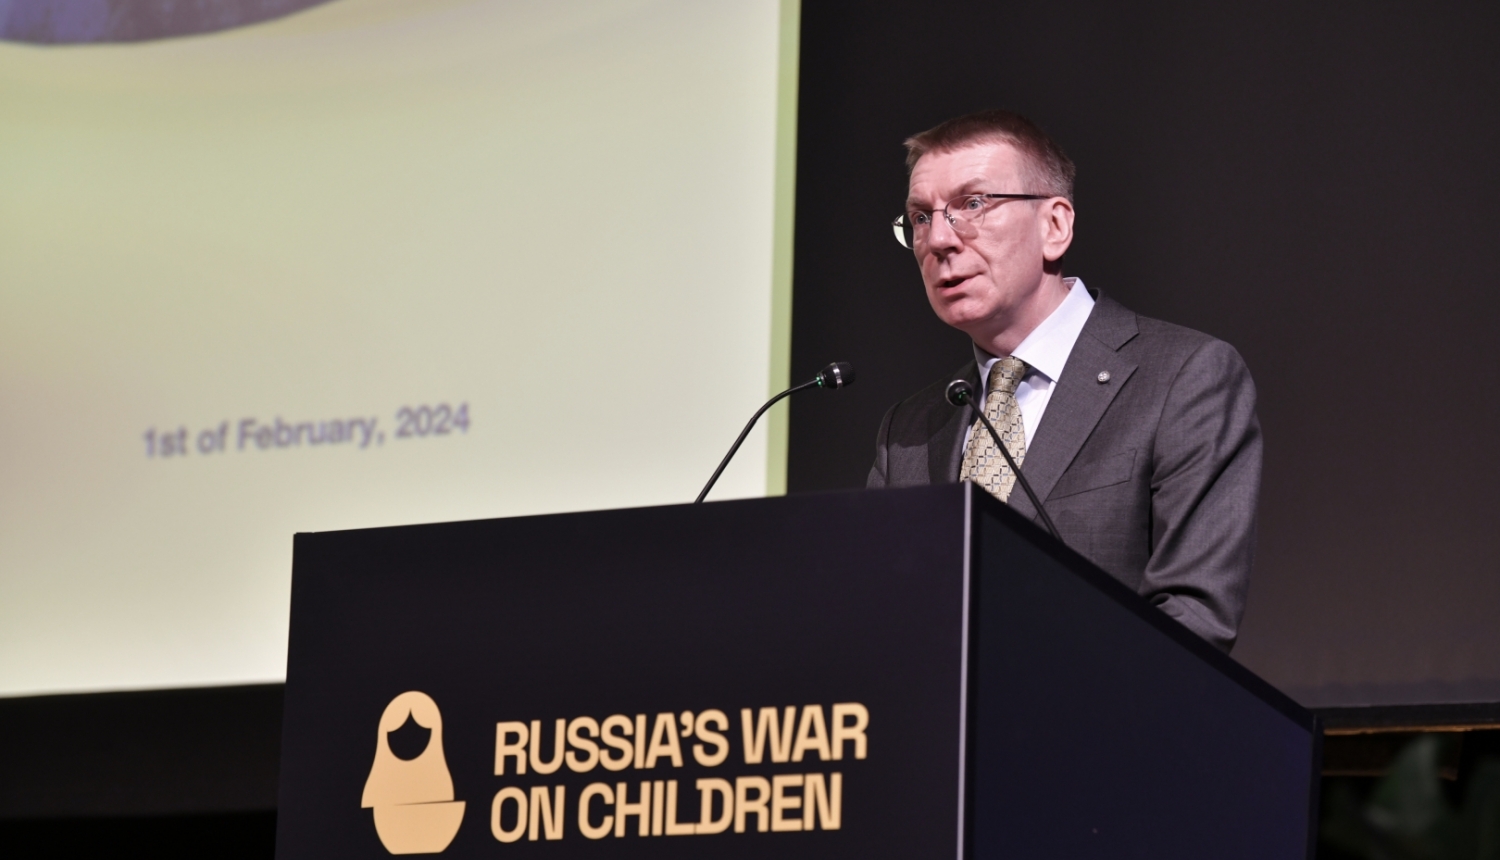 01.02.2024. Valsts prezidenta Edgara Rinkēviča dalība konferencē “Russia's War on Children”